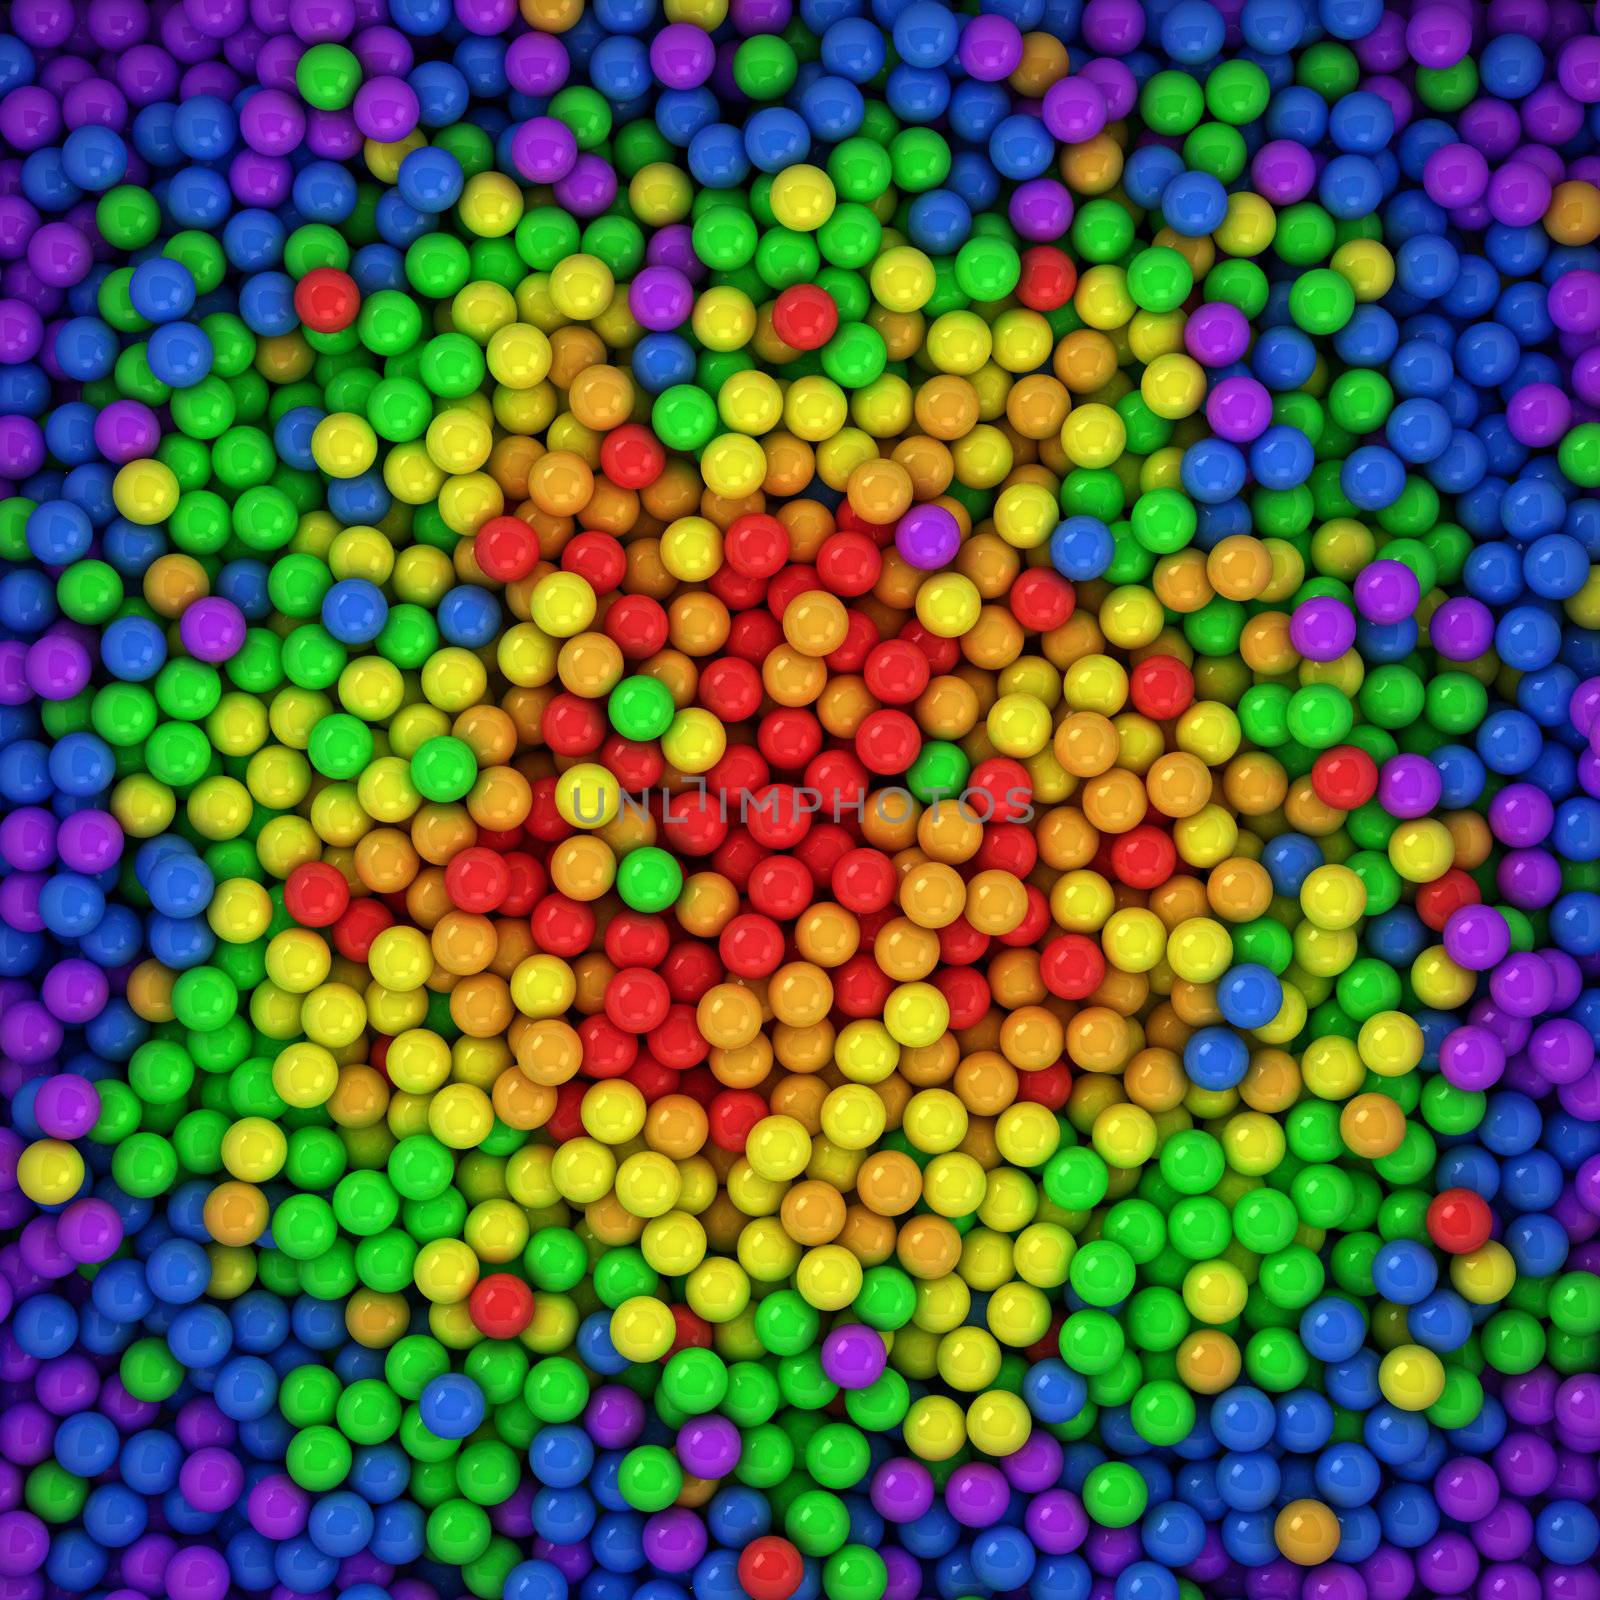 Spectrum balls by timbrk